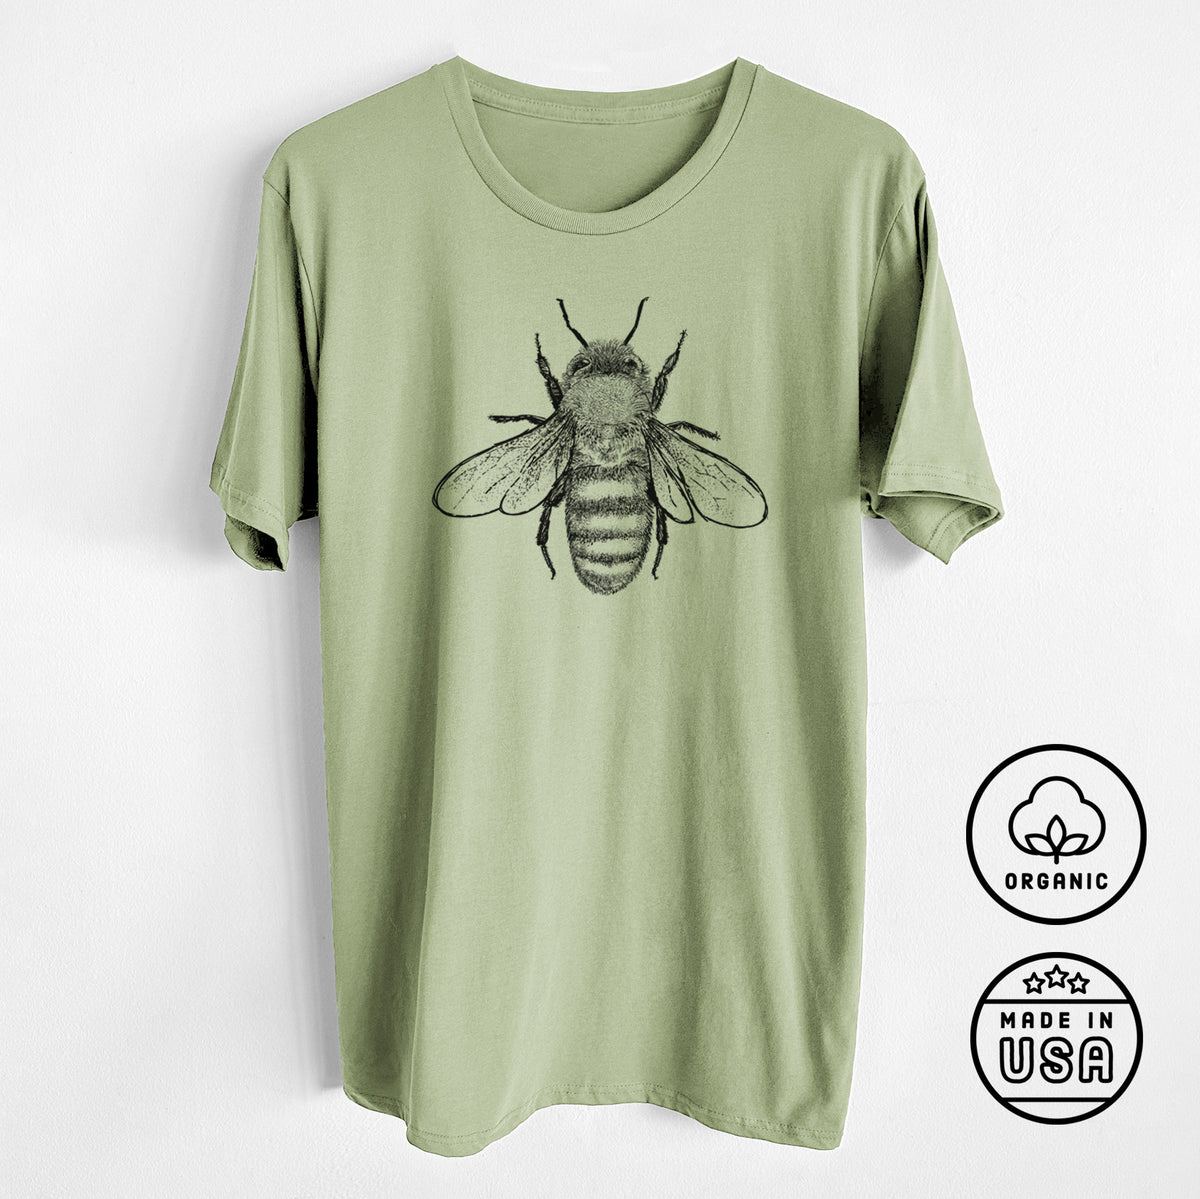 Apis Mellifera - Honey Bee - Unisex Crewneck - Made in USA - 100% Organic Cotton